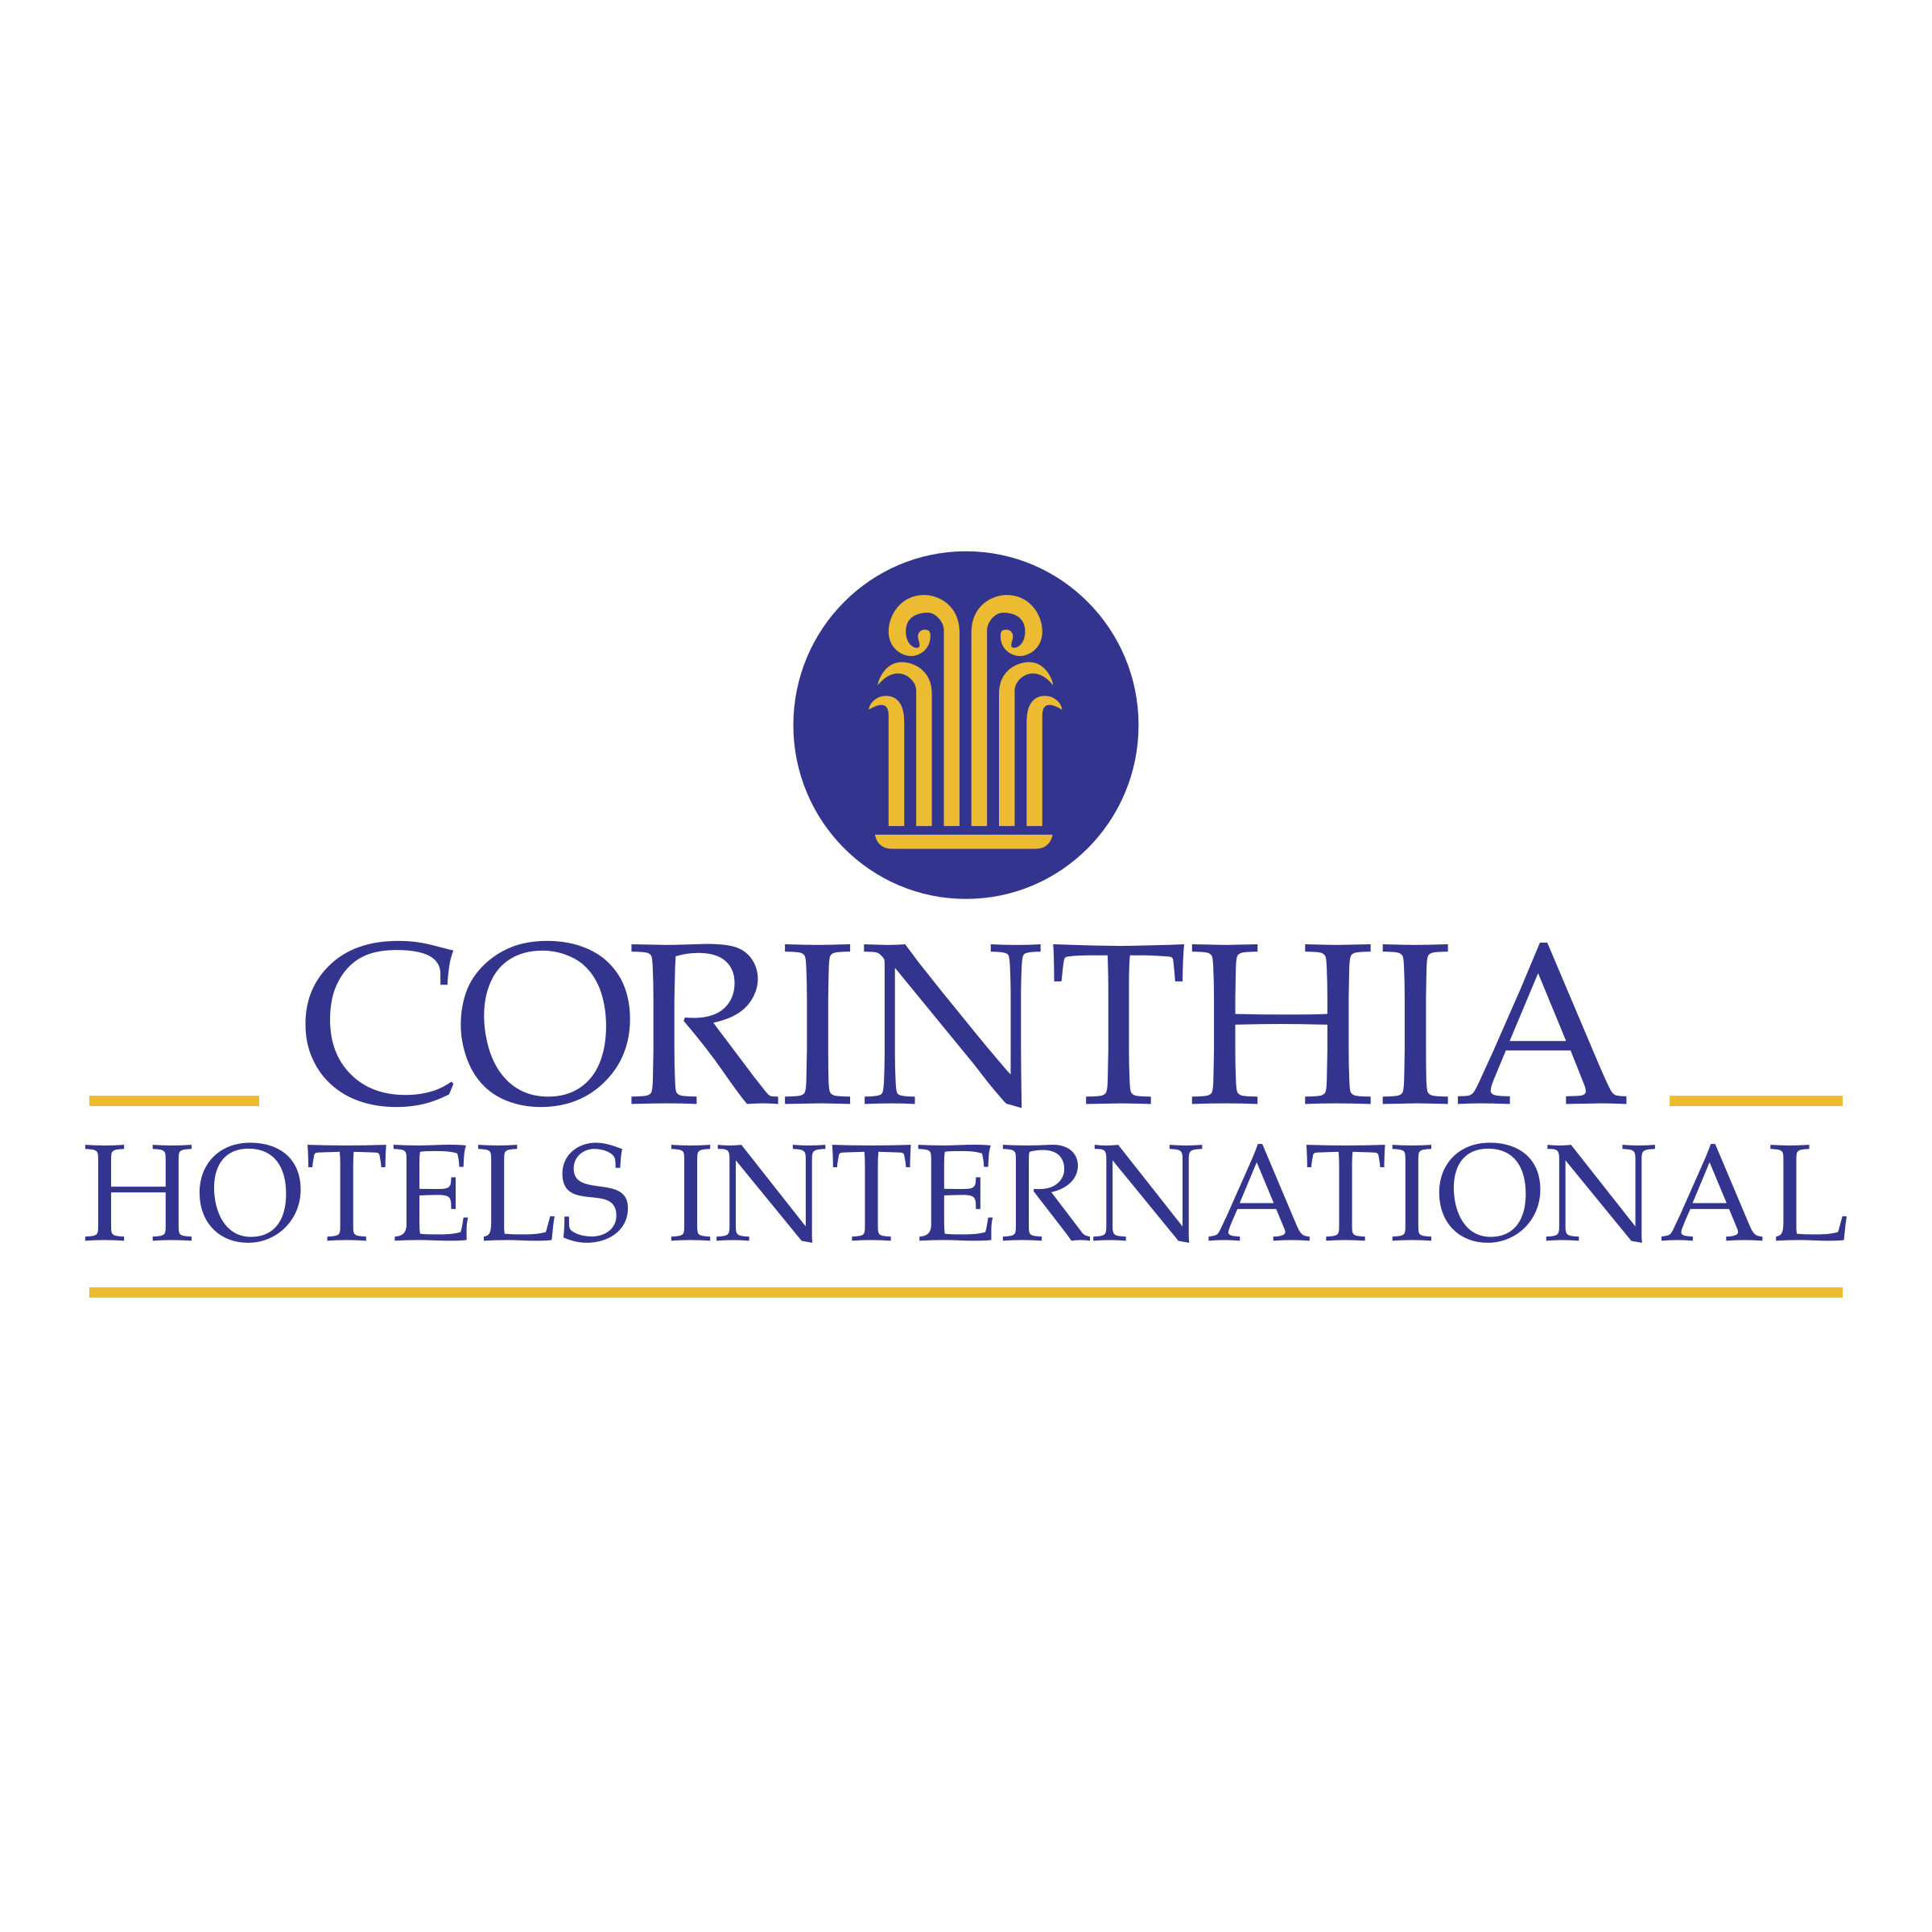 Hotels International Logo - Corinthia Hotel International Logo PNG Transparent & SVG Vector ...